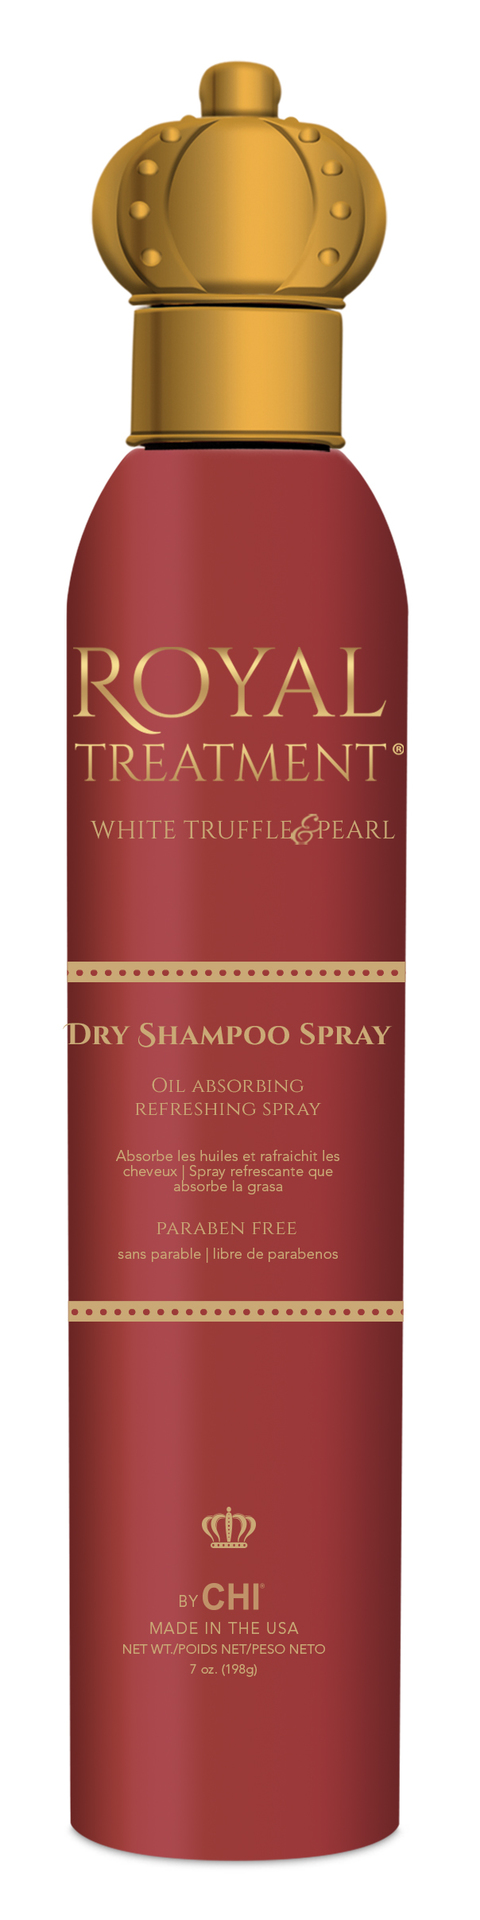 Buy Faroul Royal Treatment Dry Shampoo Spray 7oz Online Shop Beauty Personal Care On Carrefour Uae